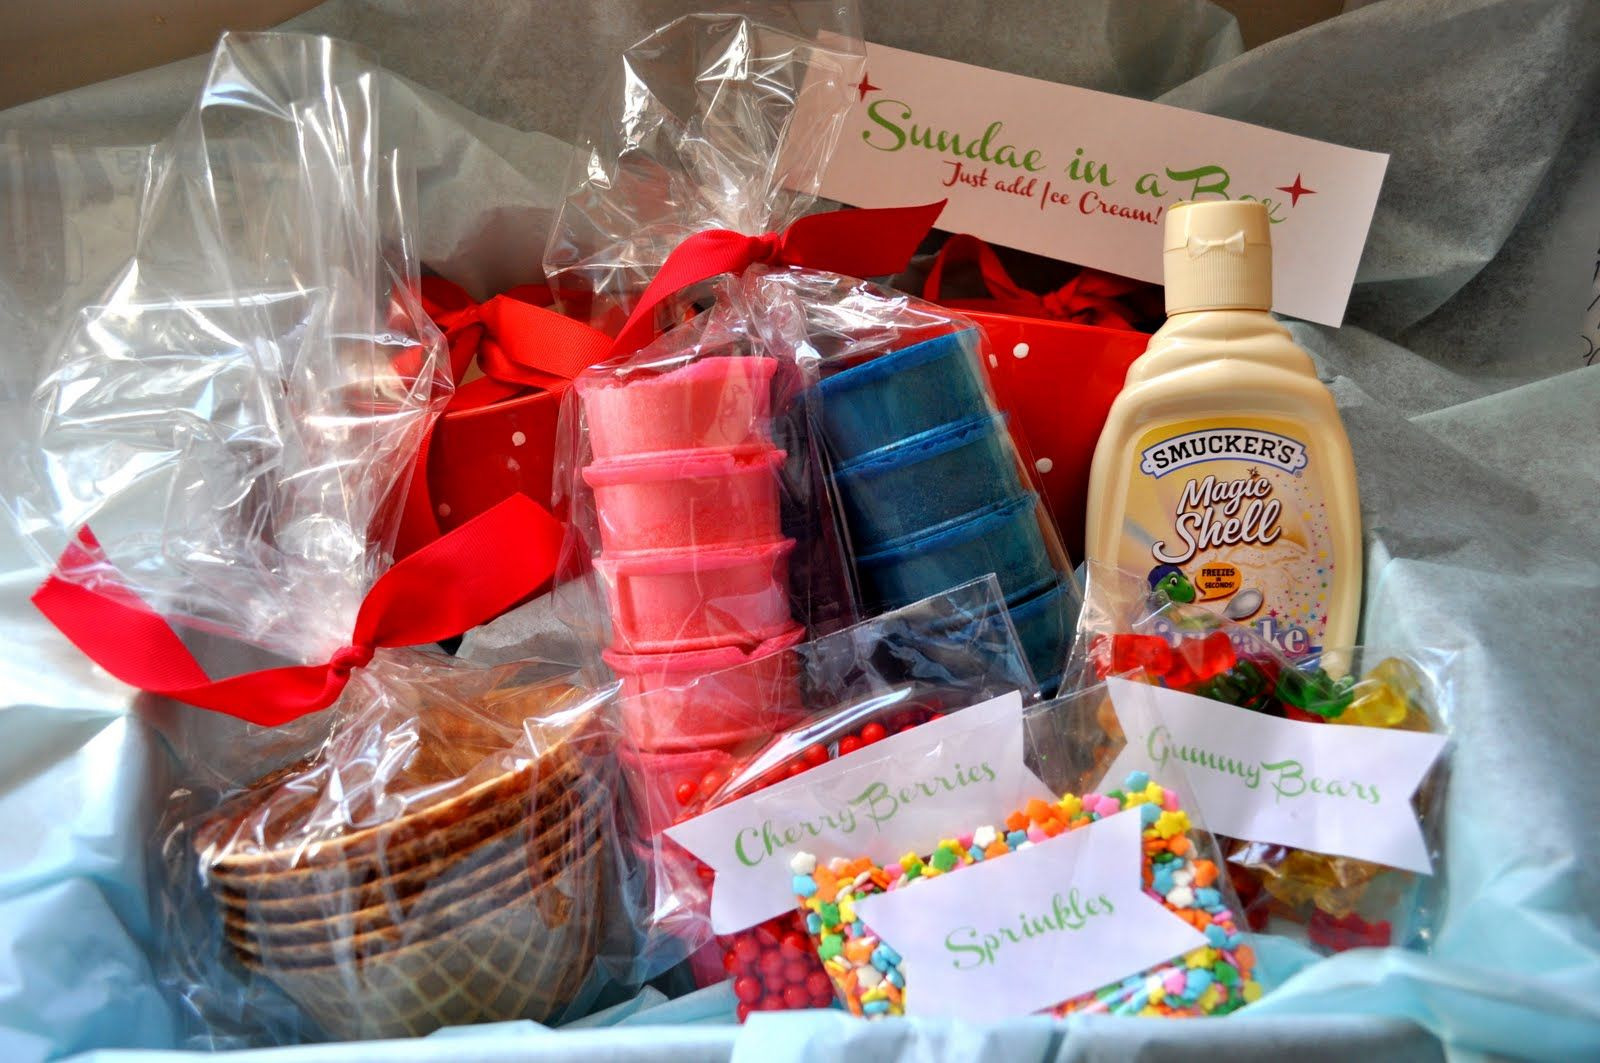 Ice Cream Sundae Gift Basket Ideas
 Ice cream sundae t basket to put on each table with